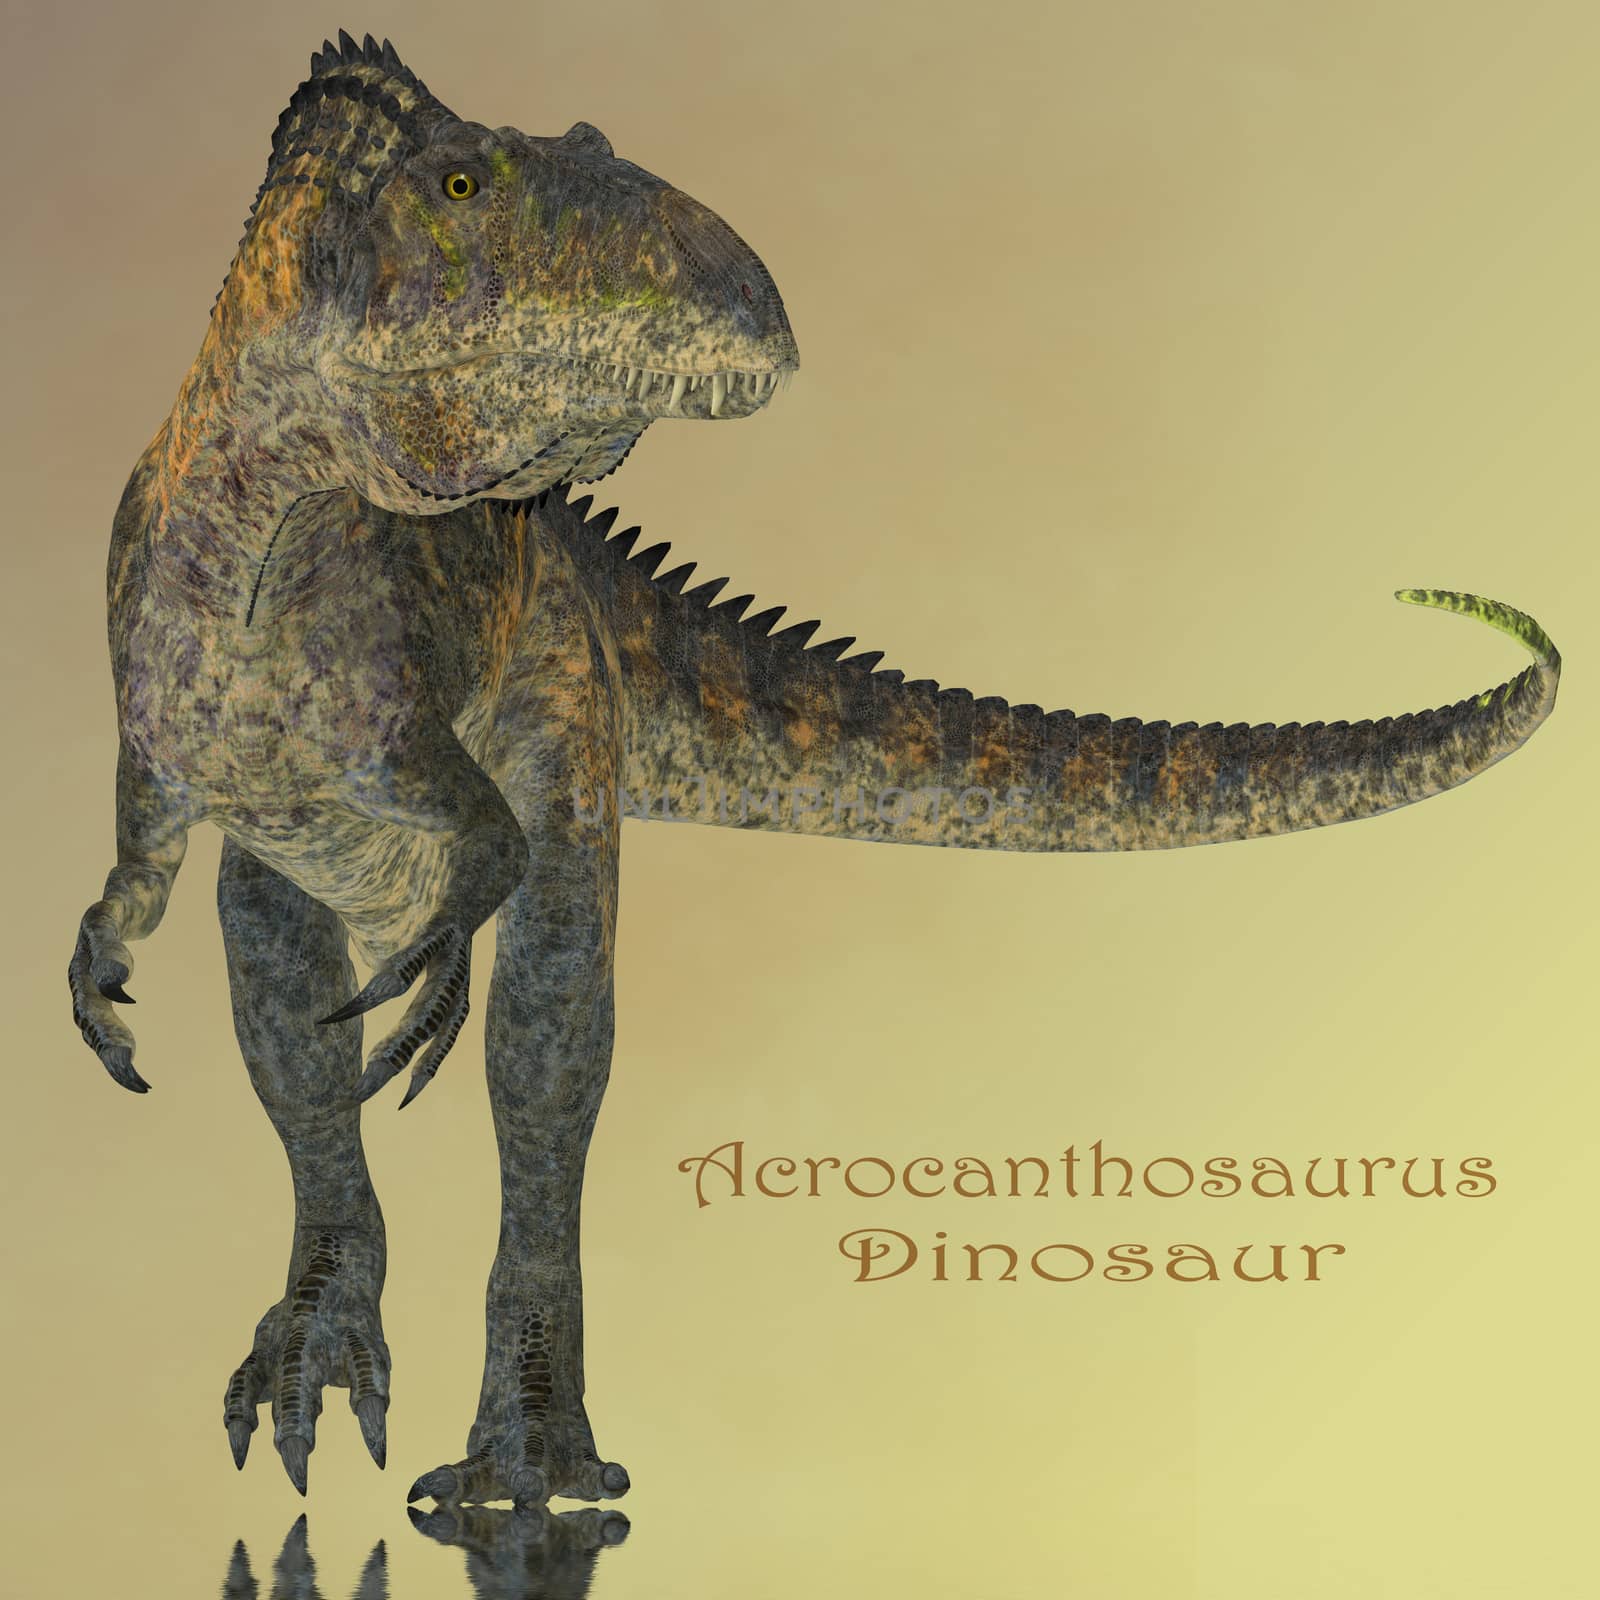 Acrocanthosaurus Dinosaur Mirror by Catmando